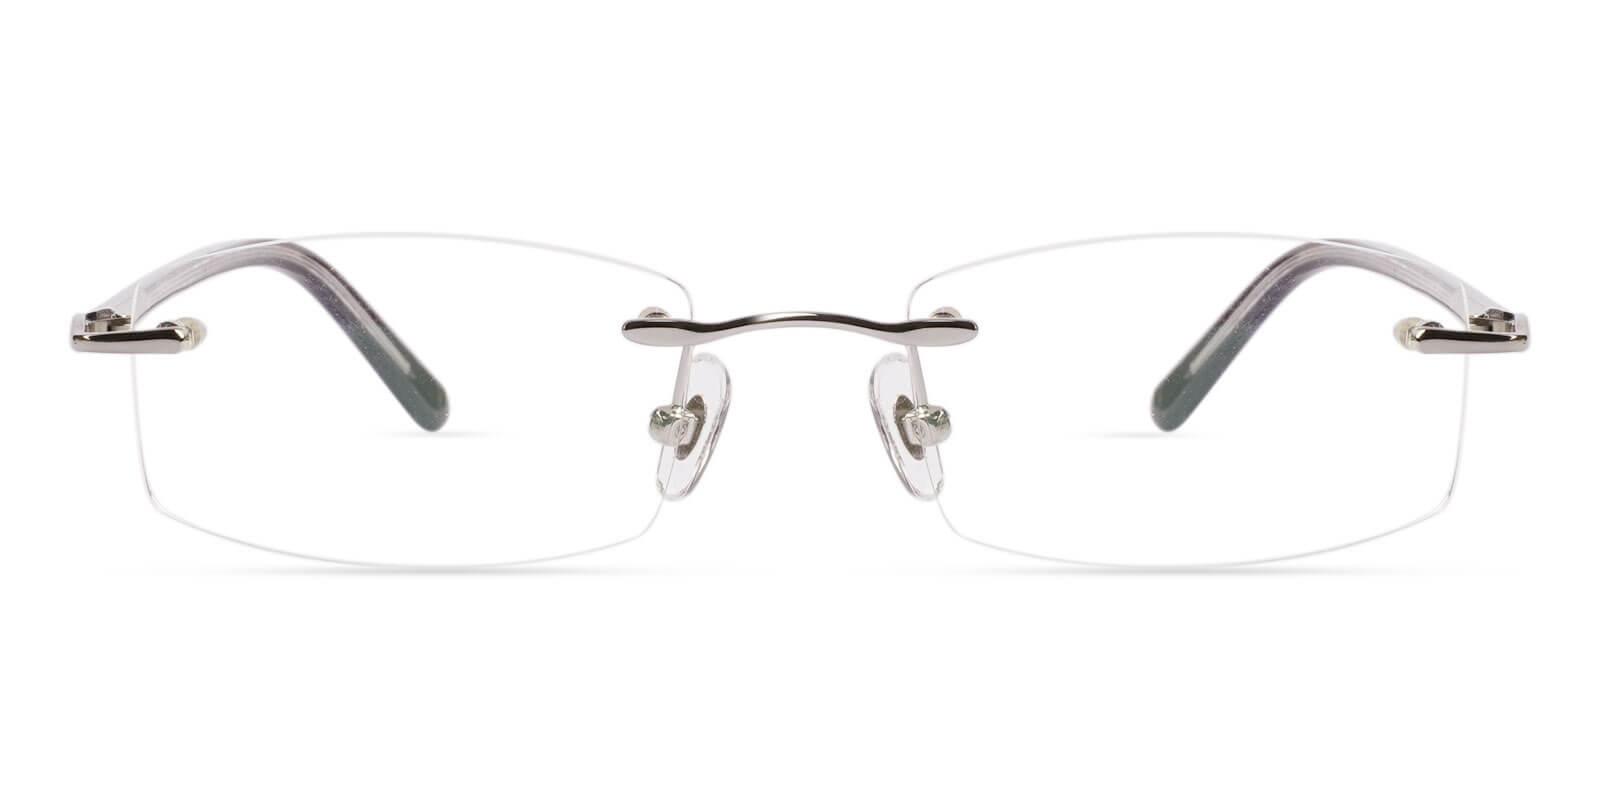 Lucas Silver Metal Eyeglasses , NosePads Frames from ABBE Glasses